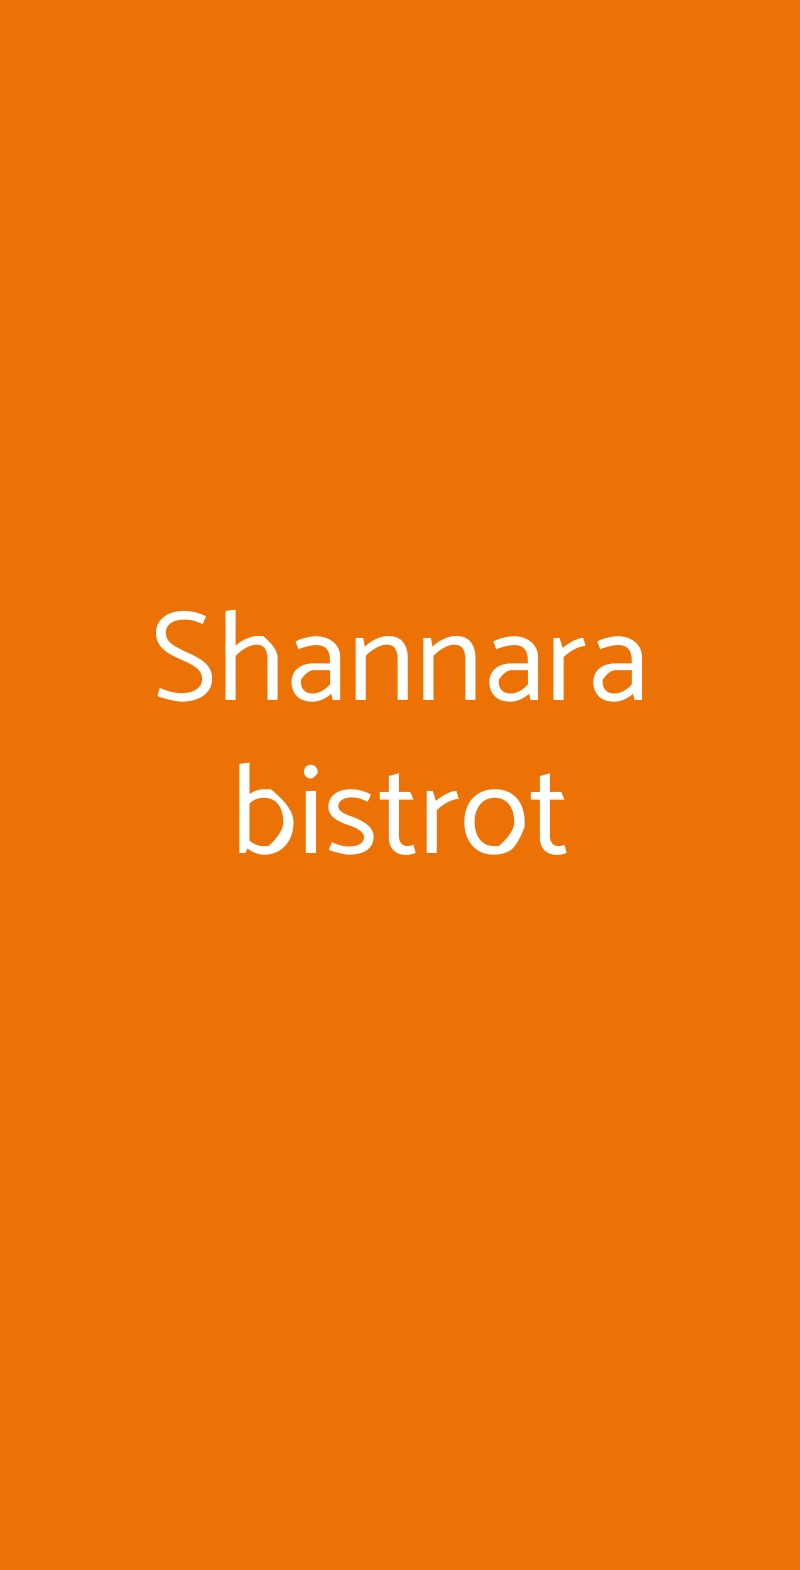 Shannara bistrot Milano menù 1 pagina